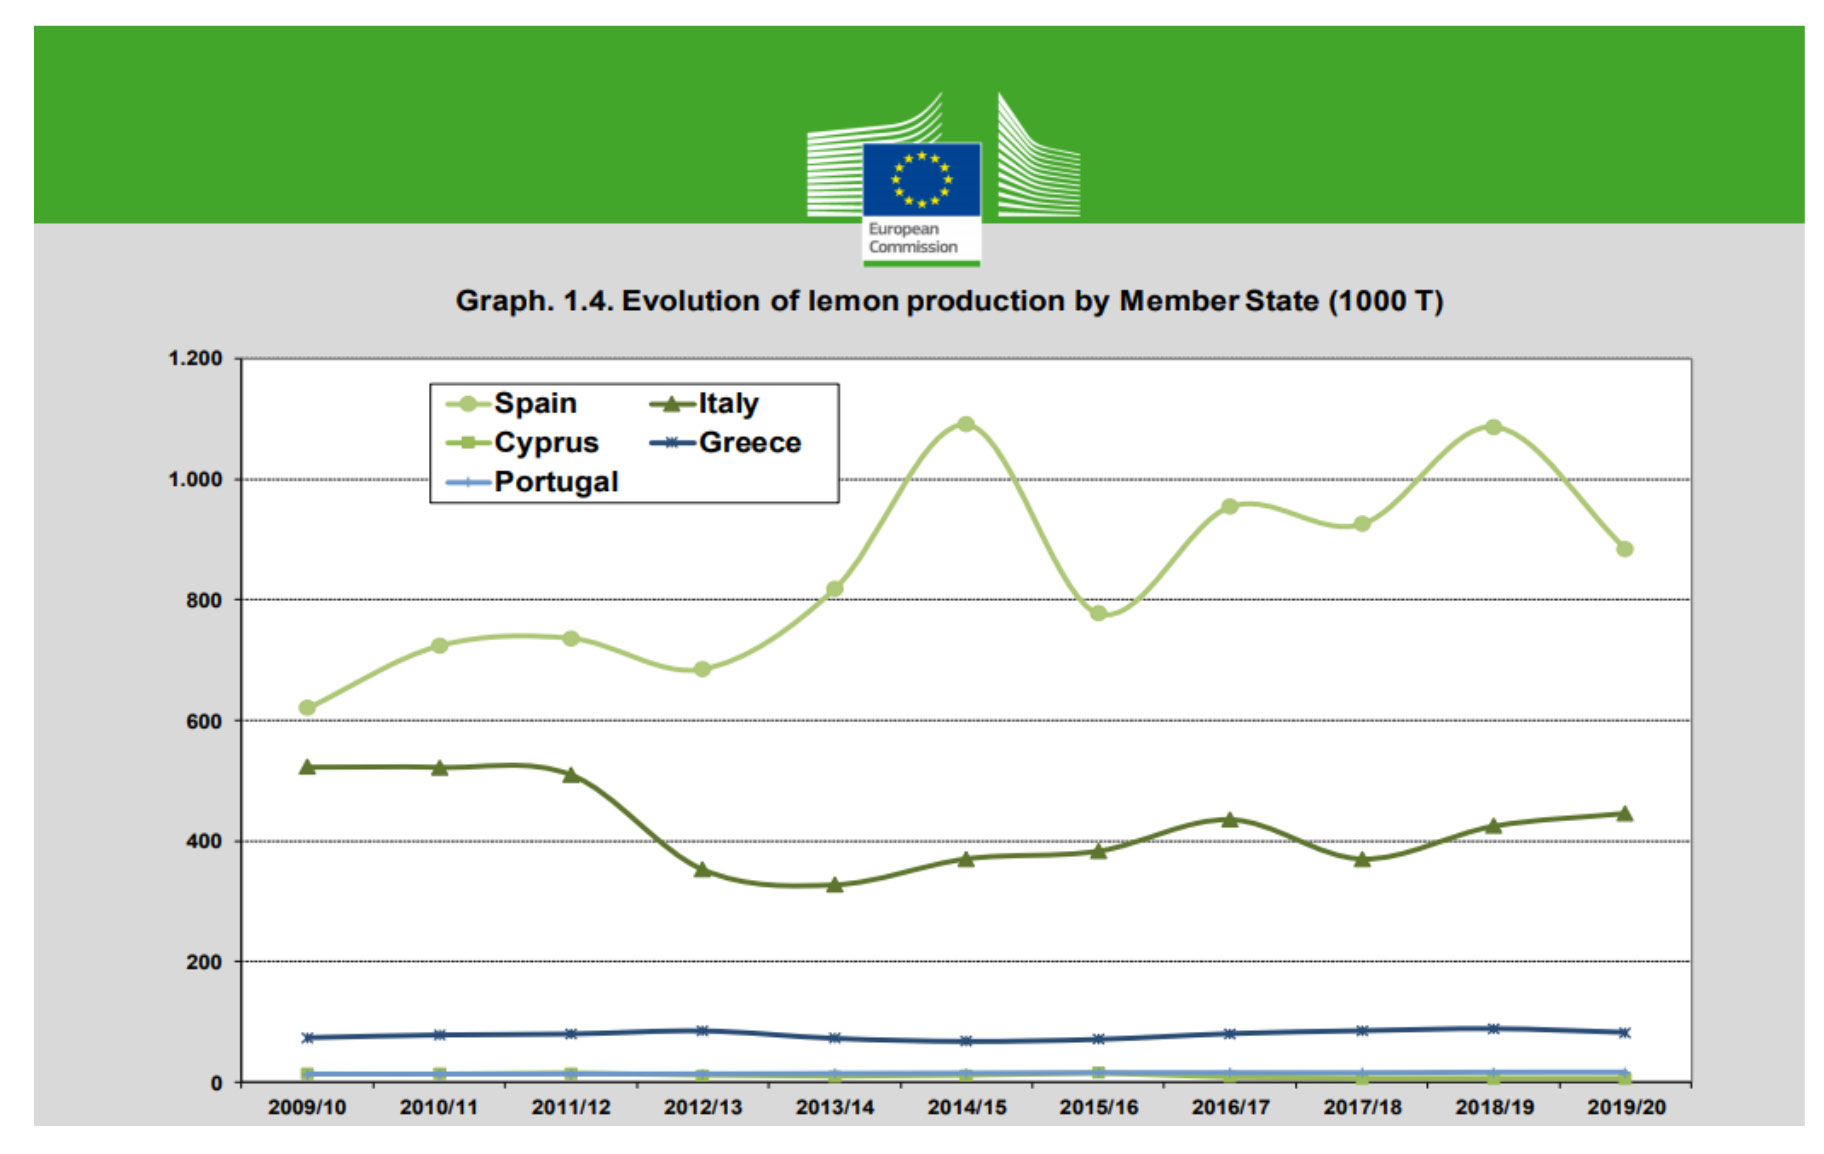 Evolucin de la produccin de limn por Estados Miembros